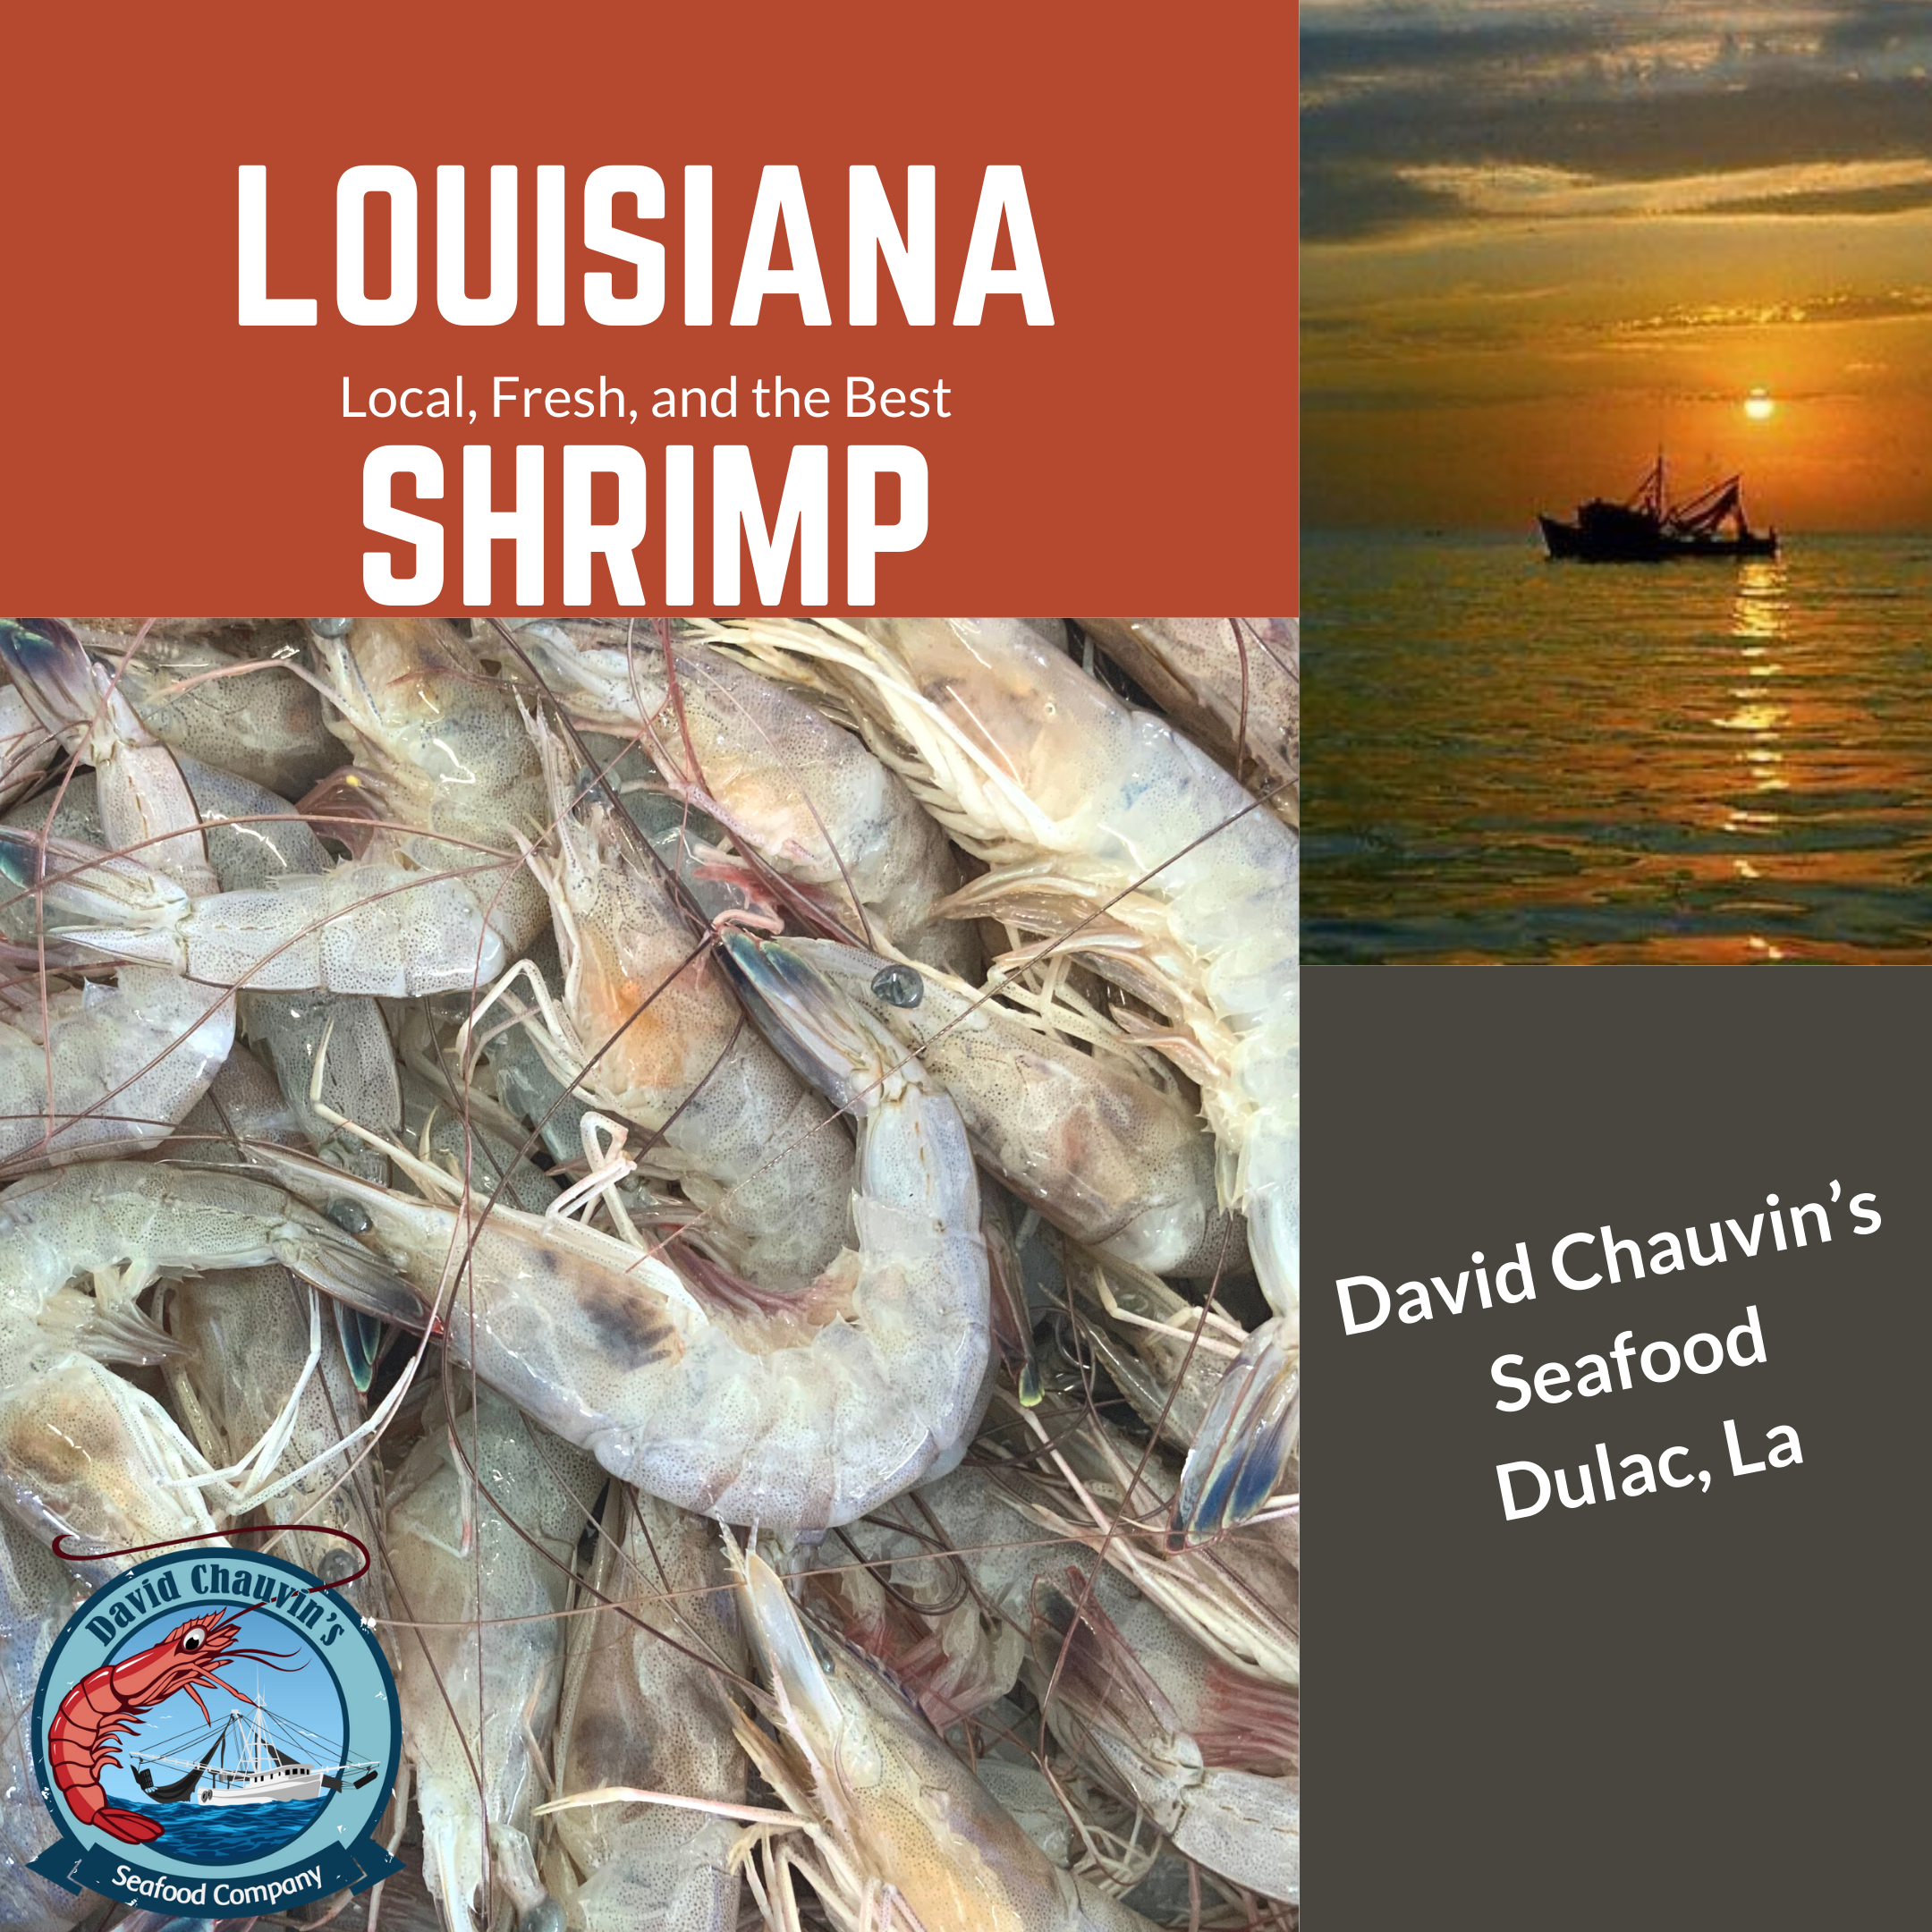 Your One-Stop Shop For Louisiana Shrimp